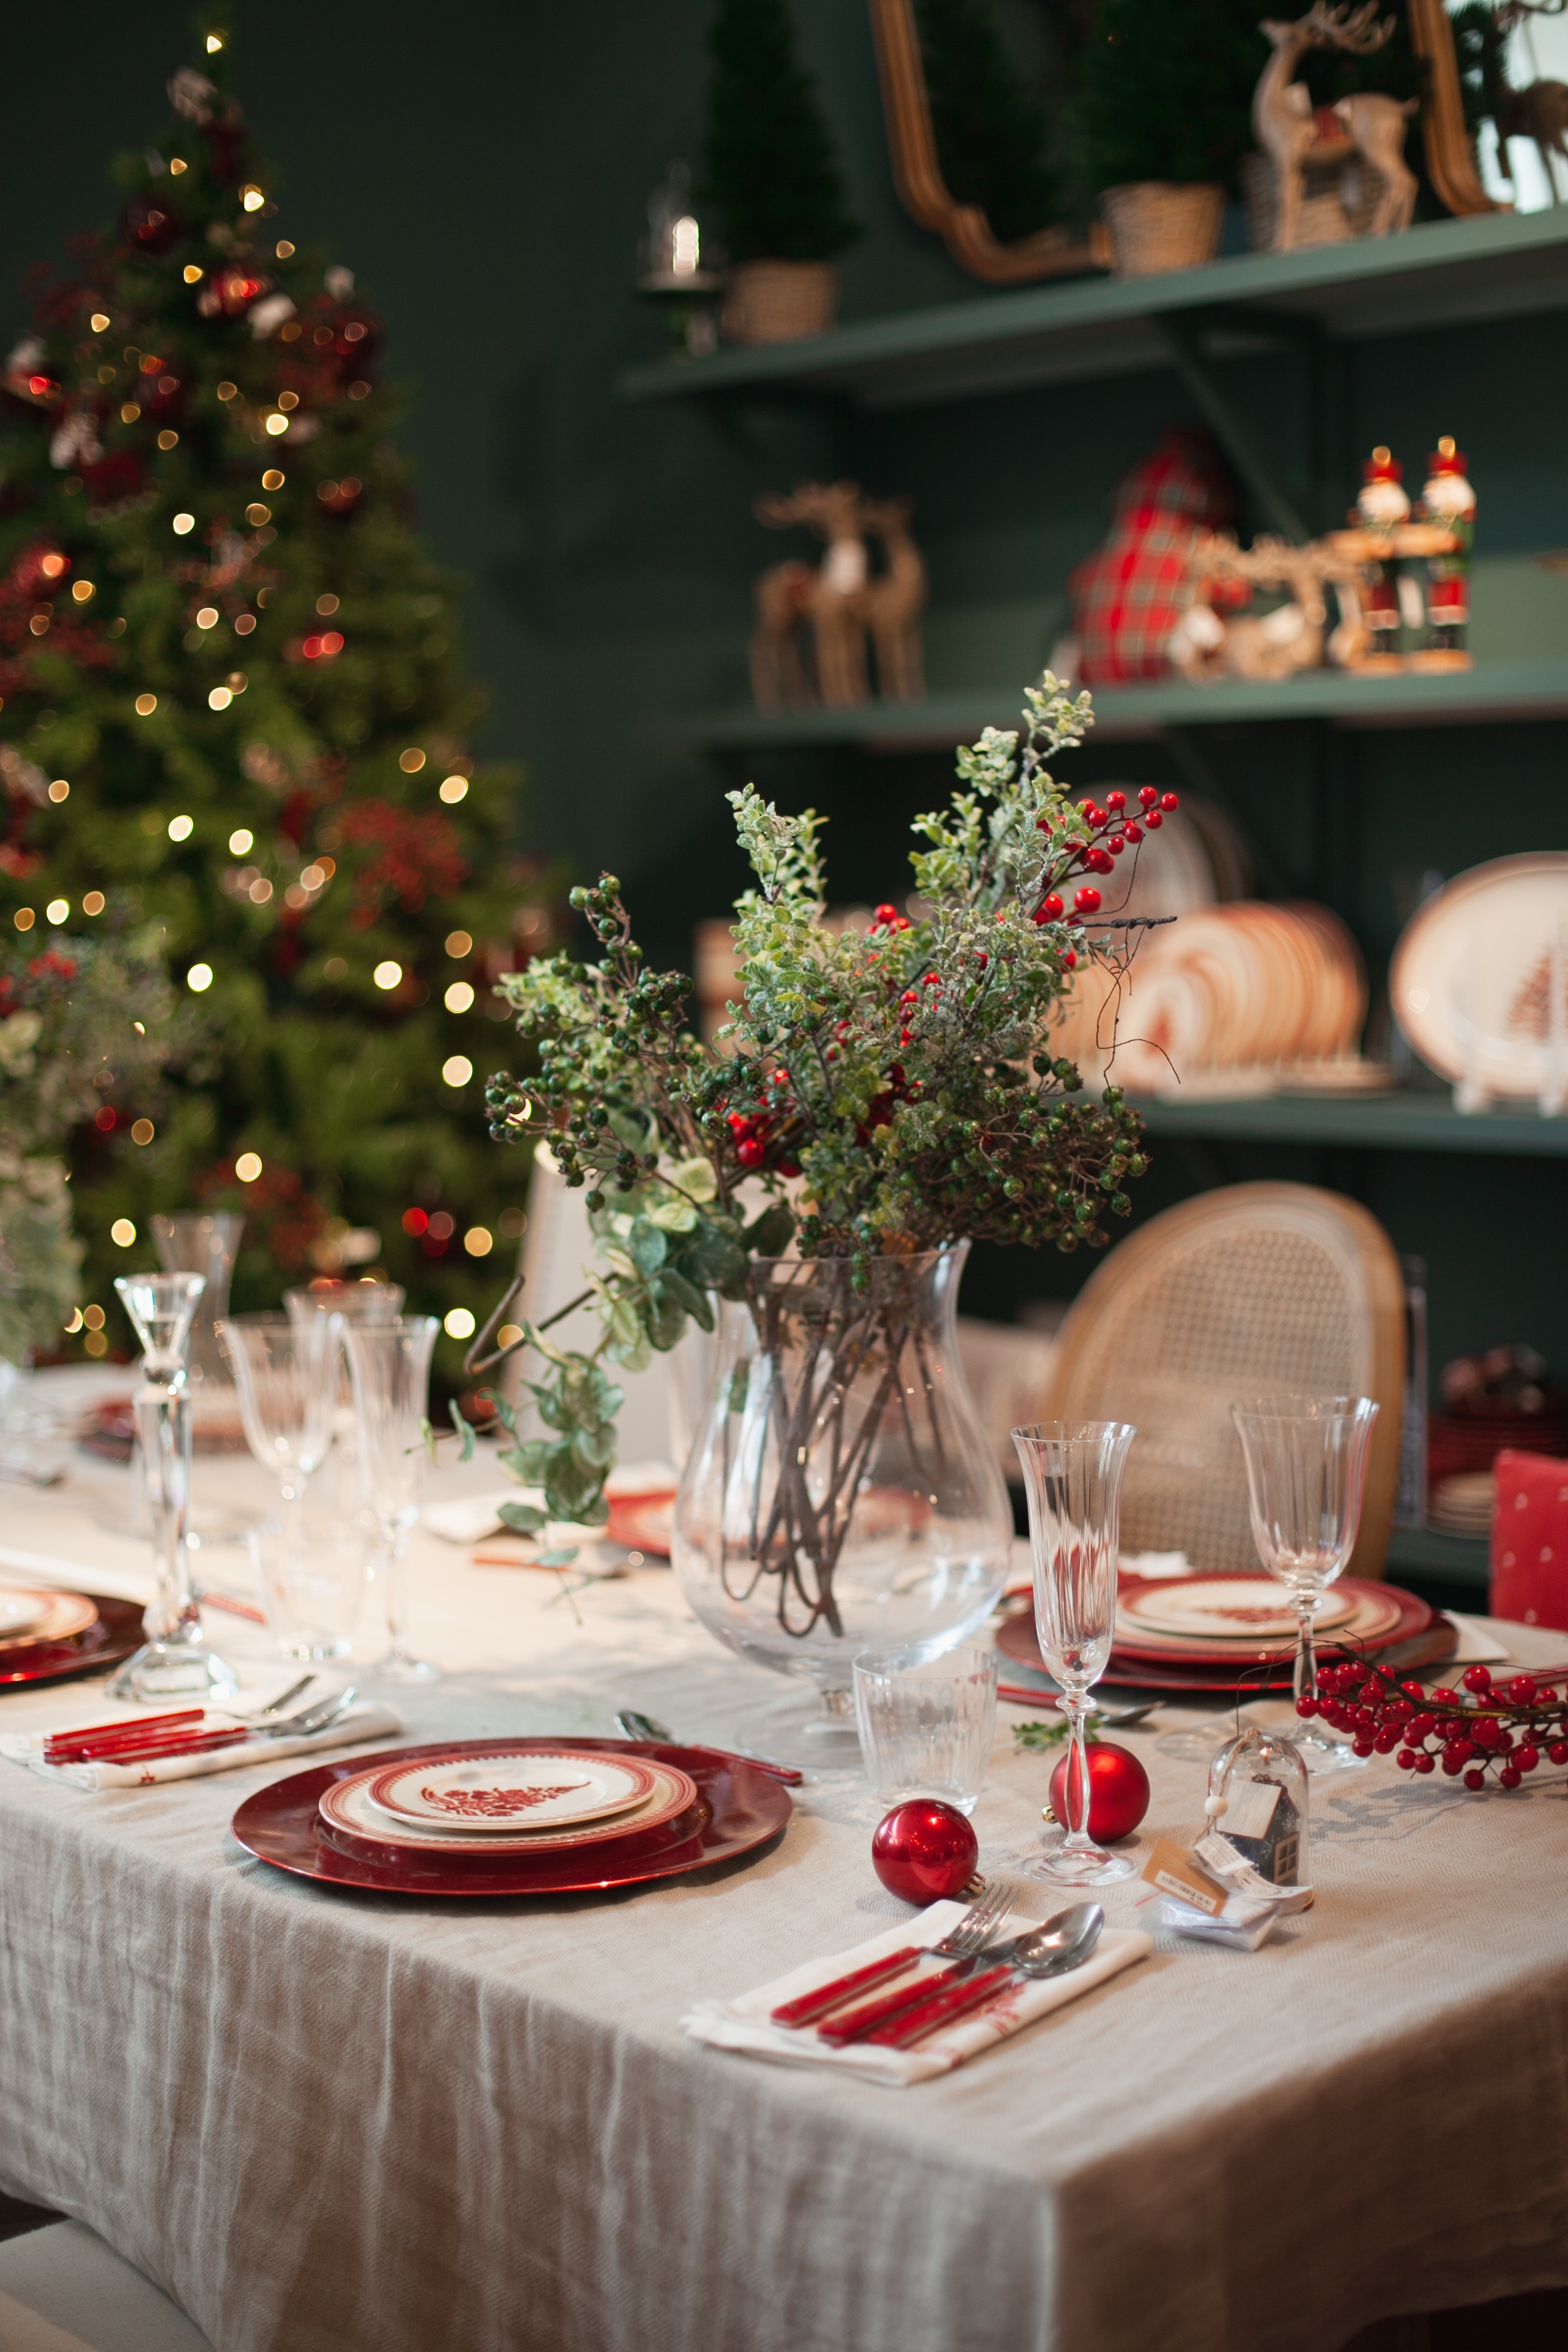 Festive christmas table | Source: Shutterstock